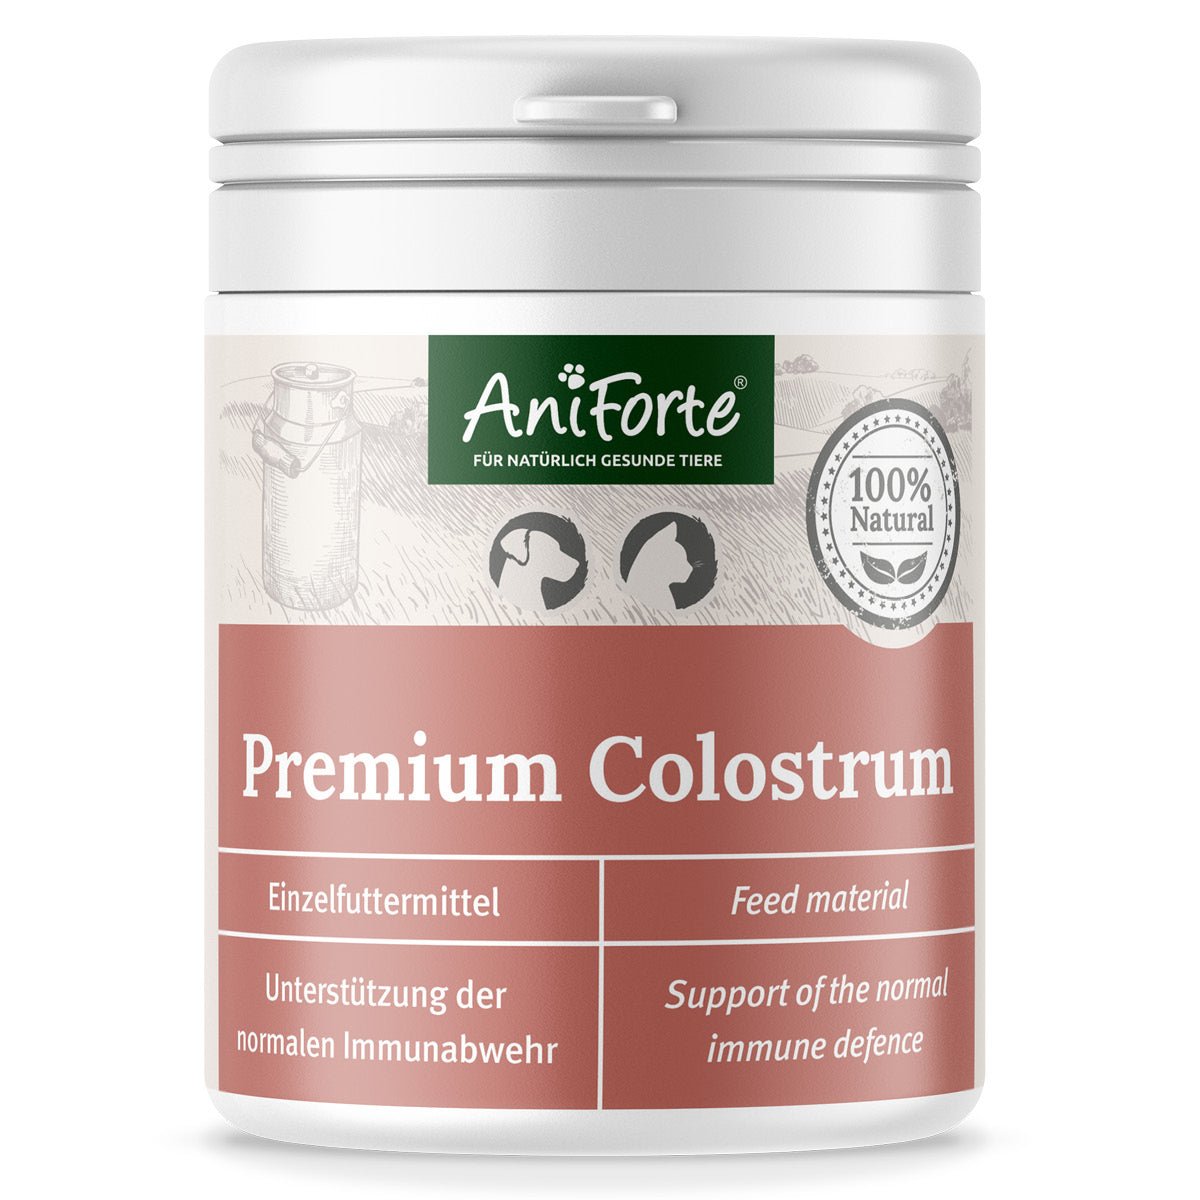 Premium Colostrum von AniForte